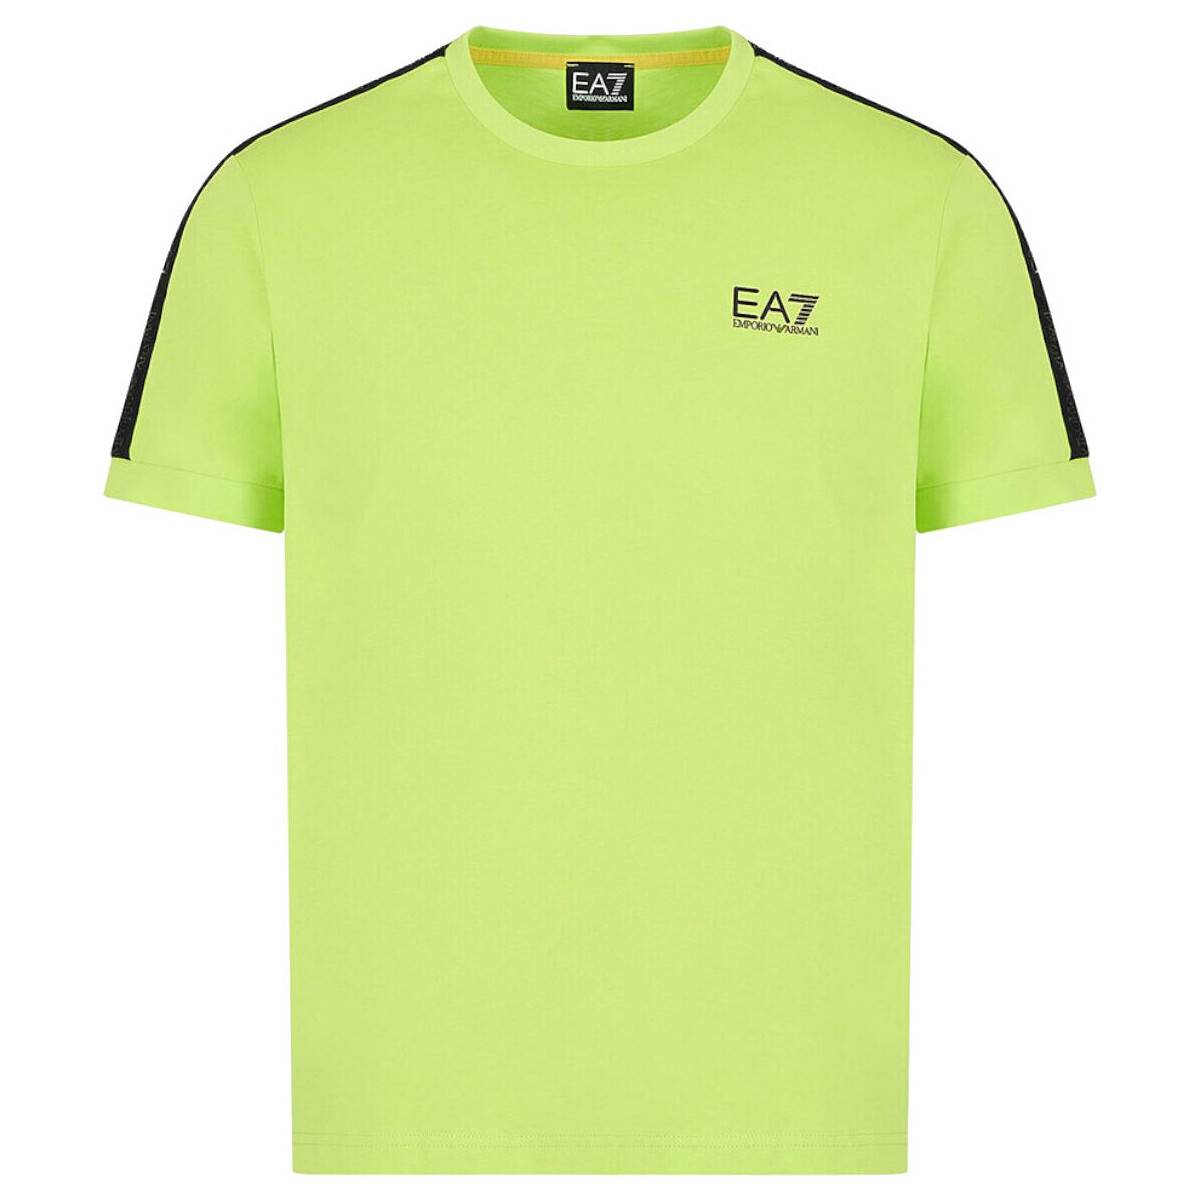 textil Hombre Camisetas manga corta Emporio Armani EA7 3DPT35-PJ02Z Verde